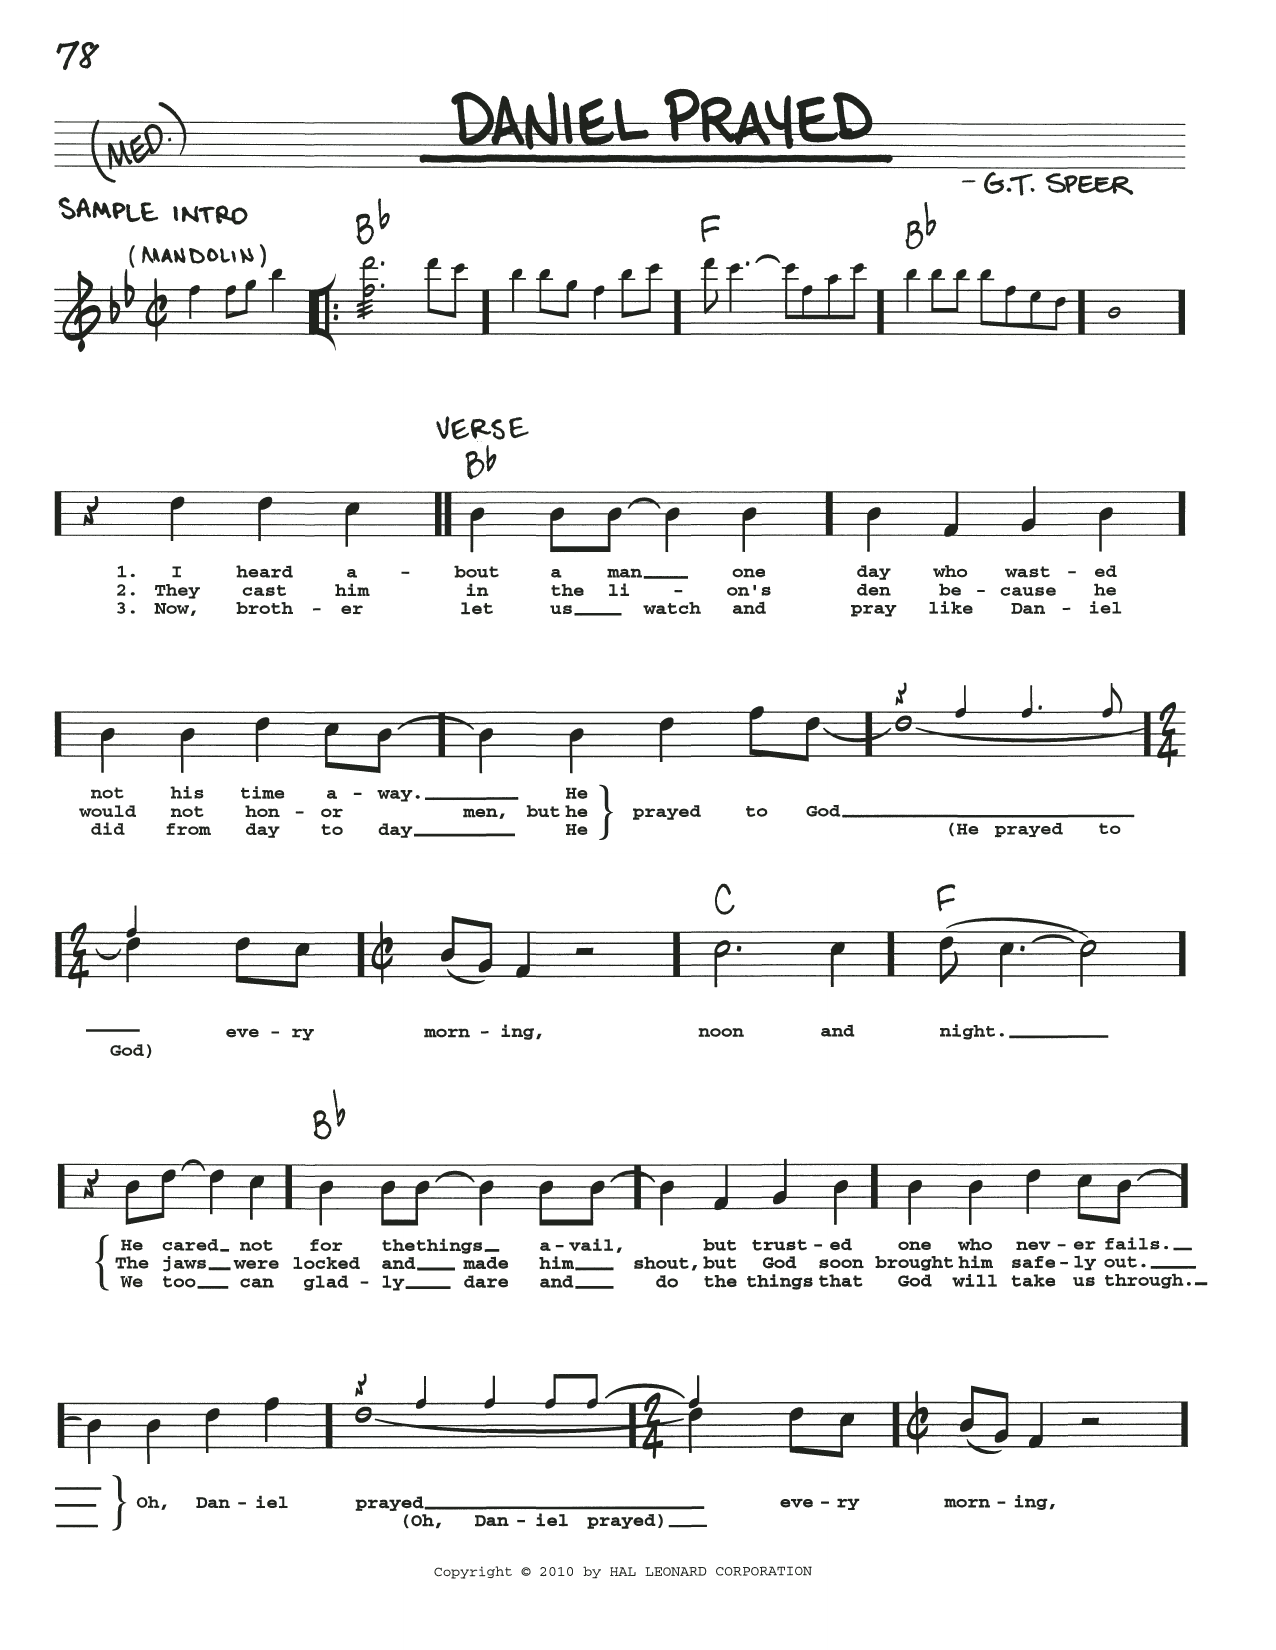 G.T. Speer Daniel Prayed Sheet Music Notes & Chords for Real Book – Melody, Lyrics & Chords - Download or Print PDF